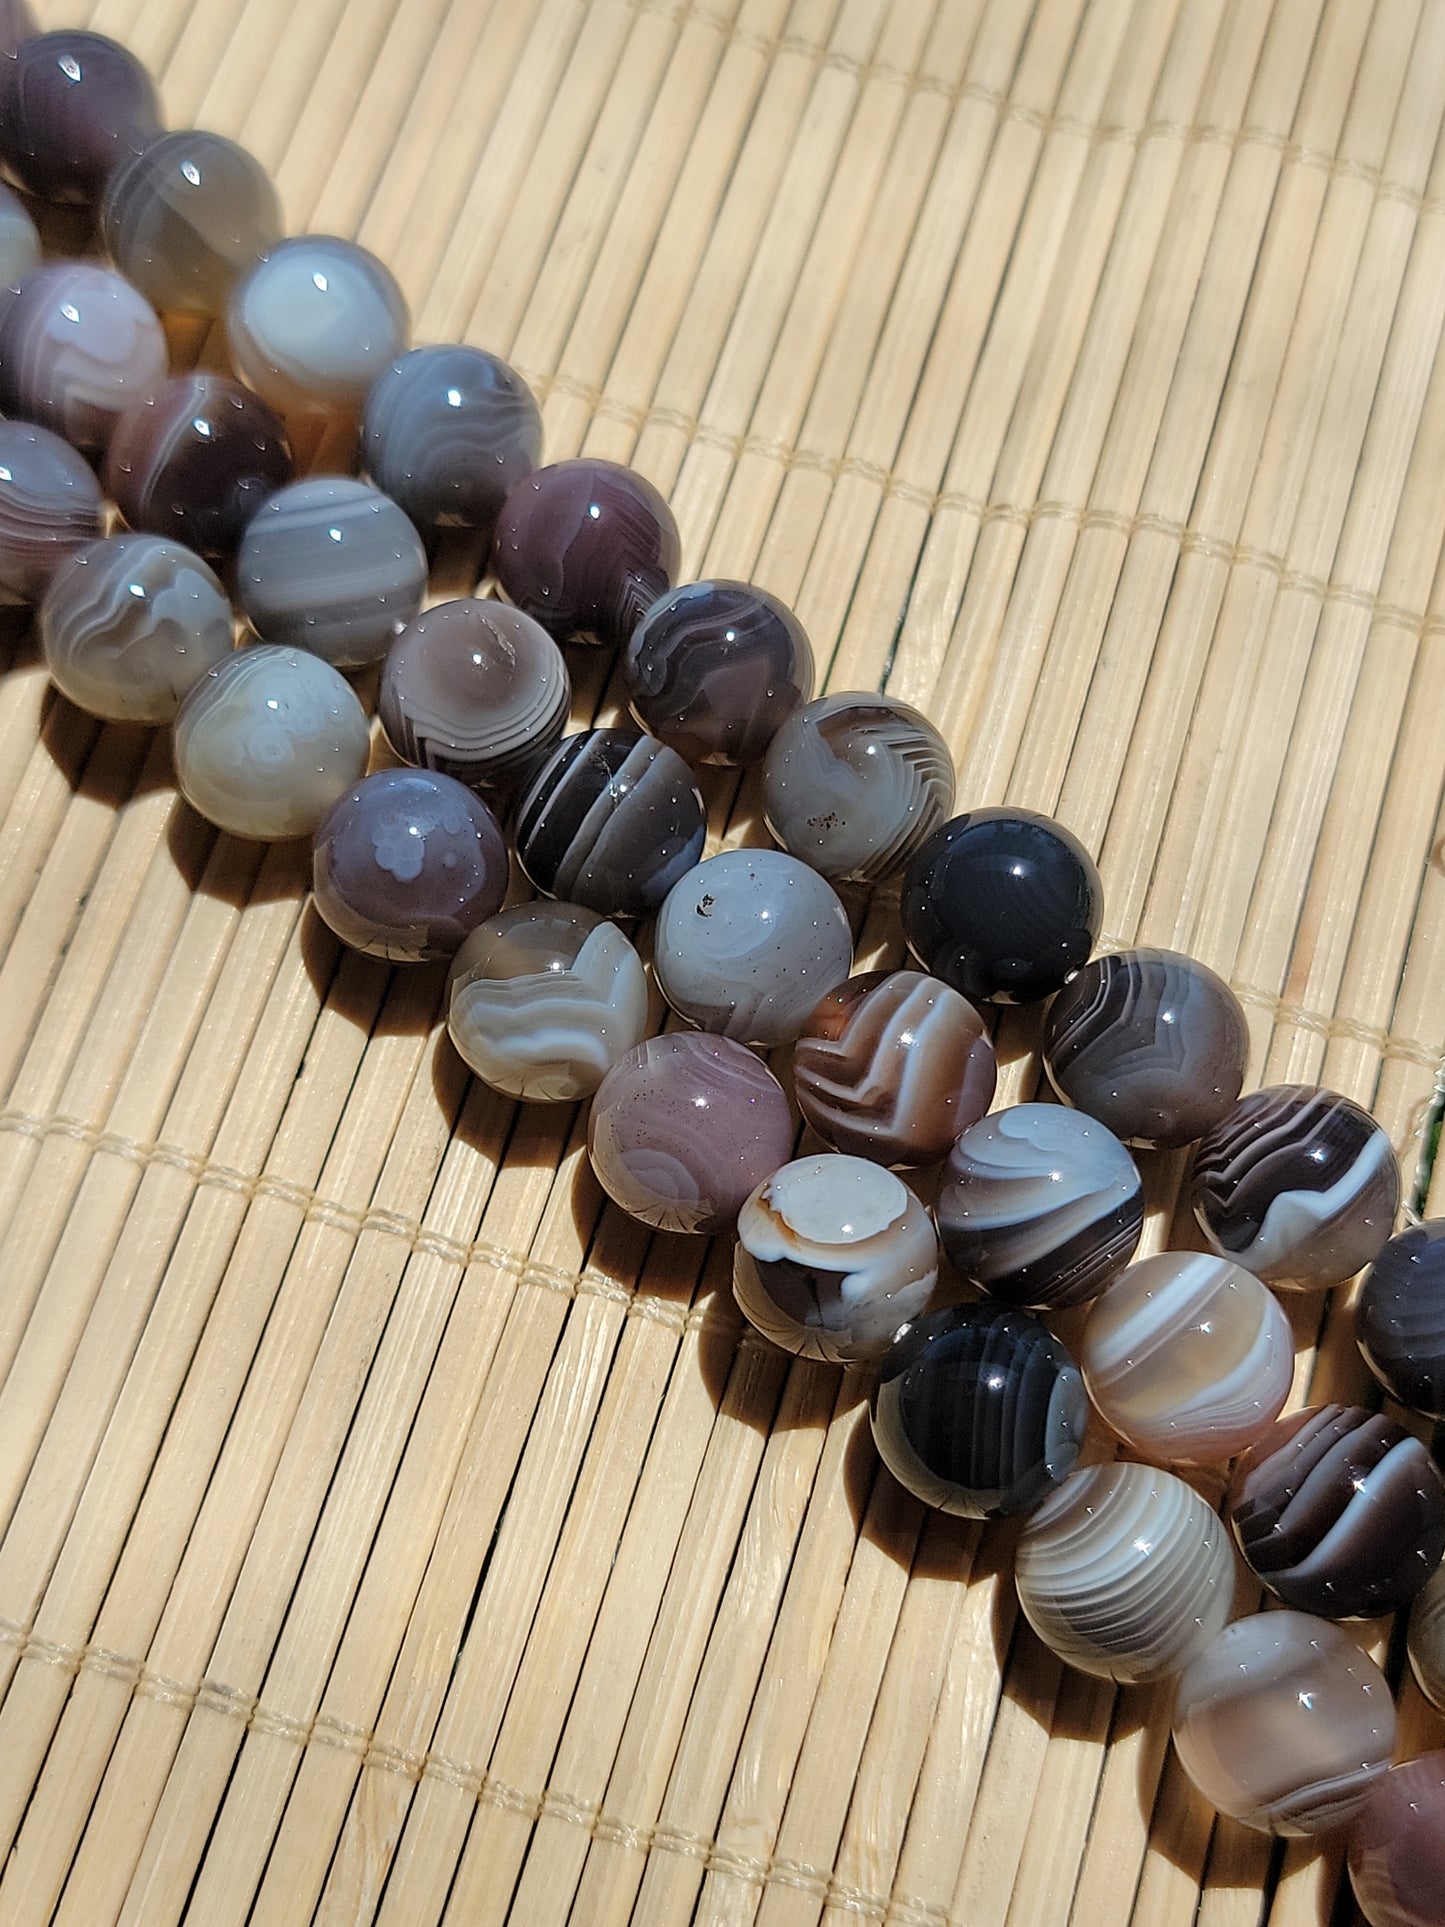 Botswana Agate Beads, Agate Gemstones